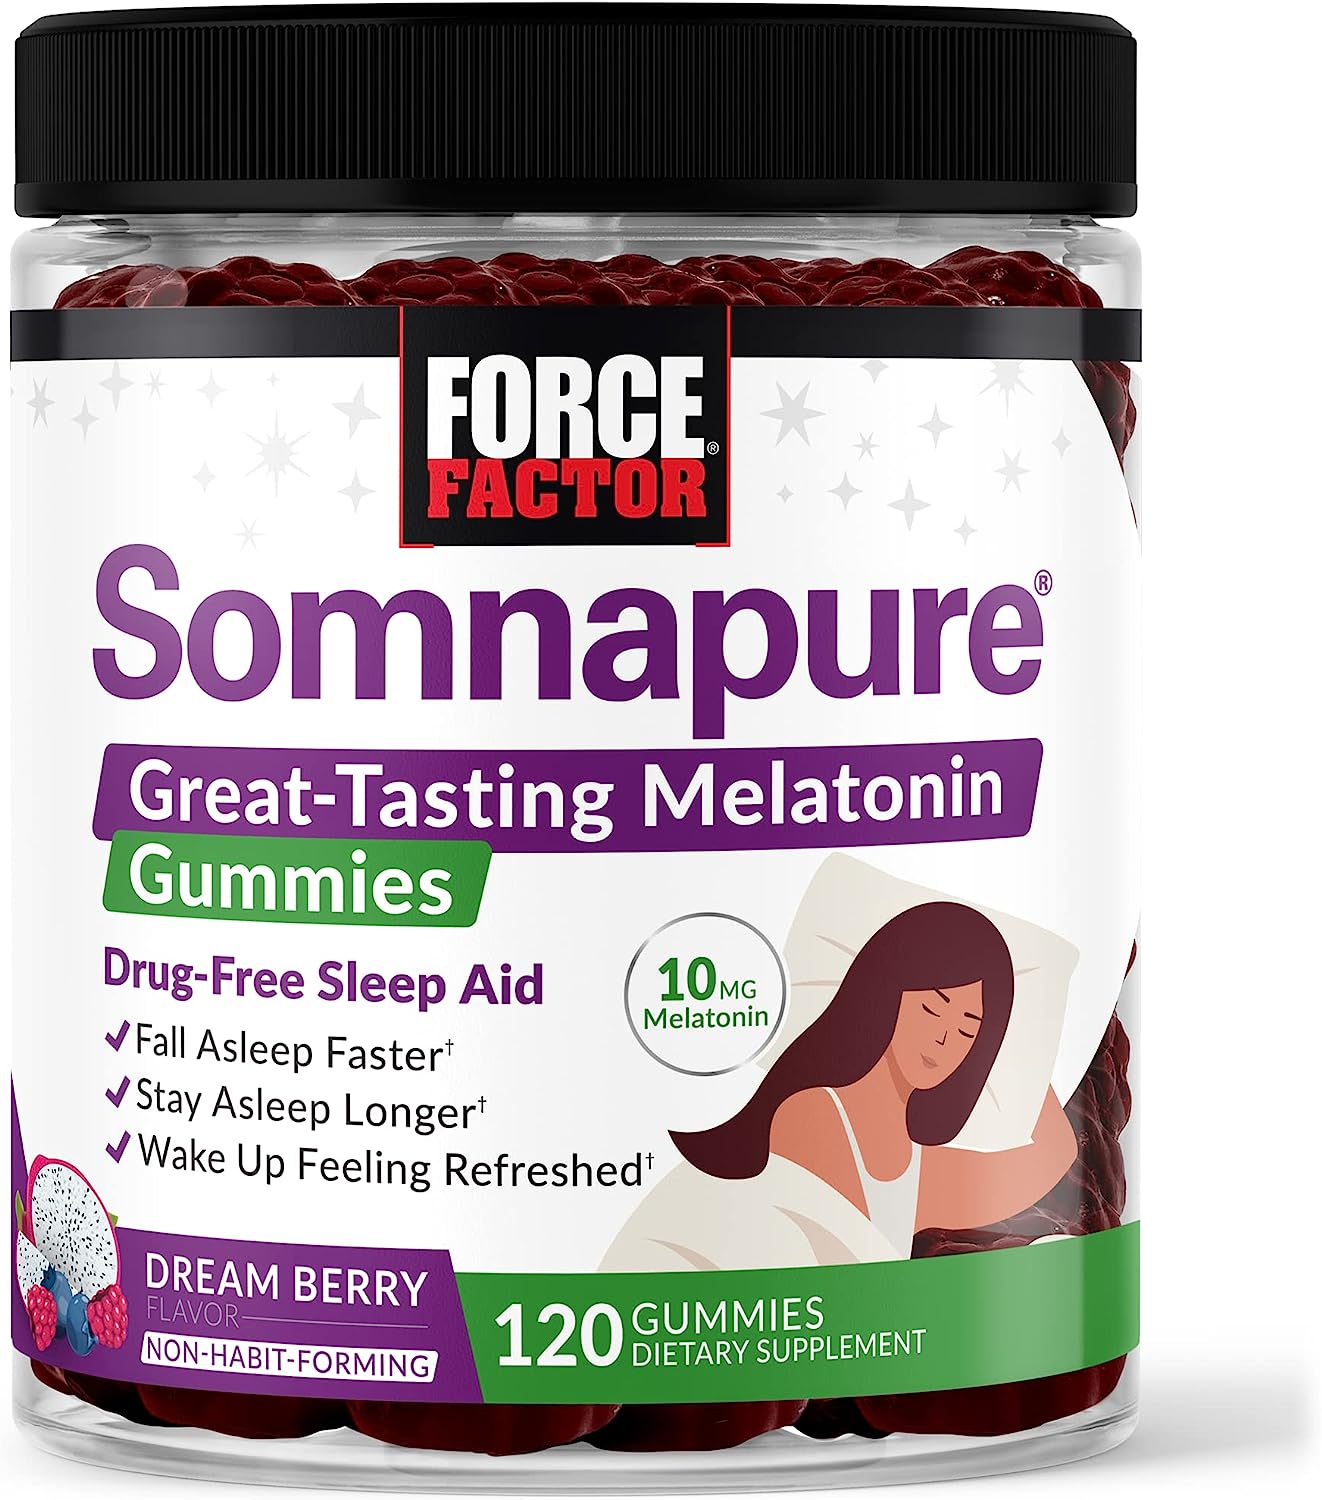 Force Factor Somnapure Gummies with Melatonin